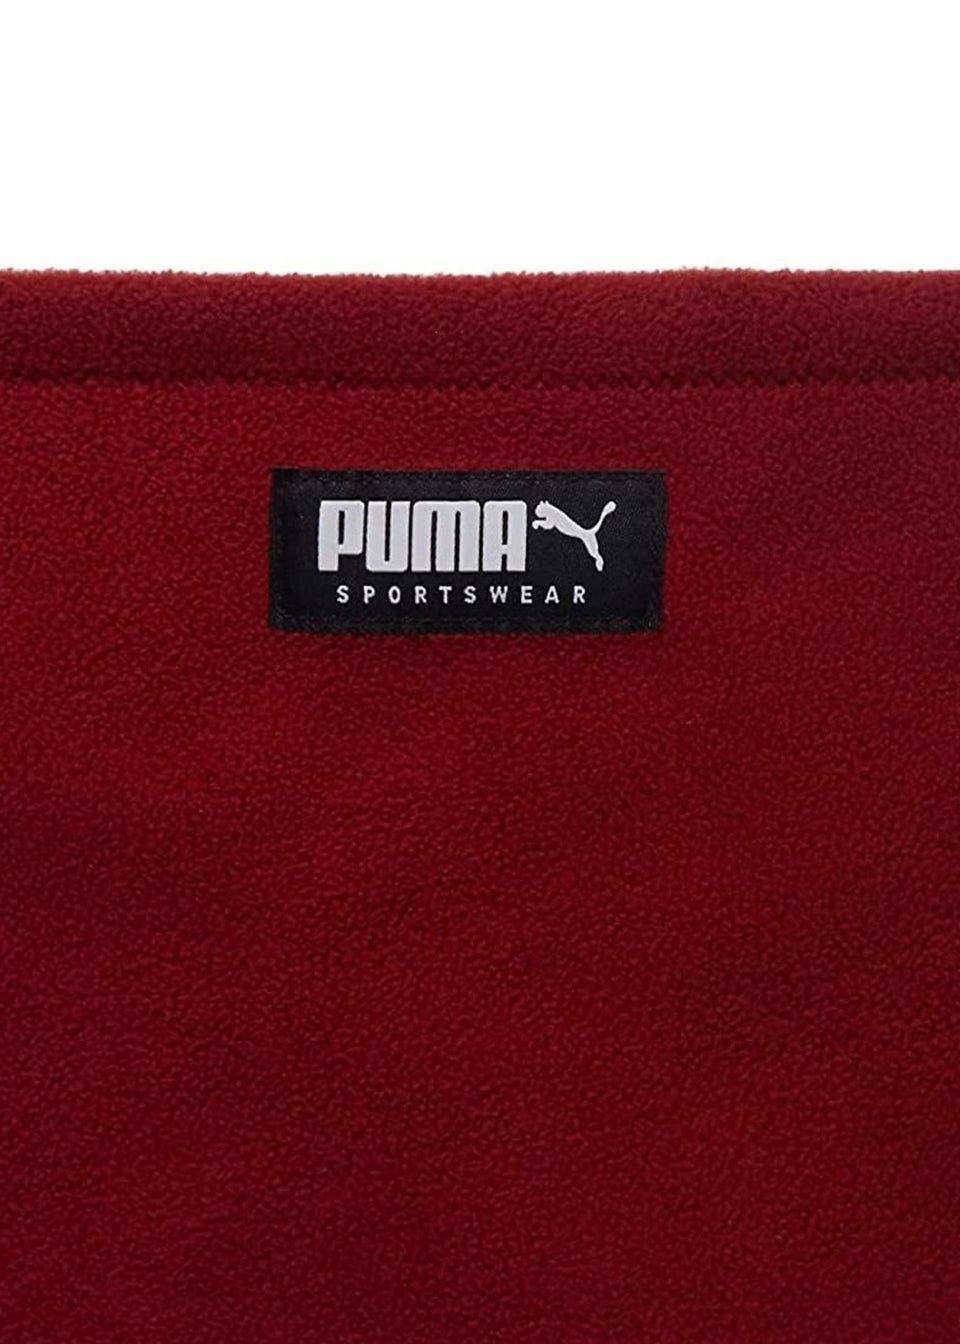 Puma Black/Red Fleece Reversible Neck Warmer